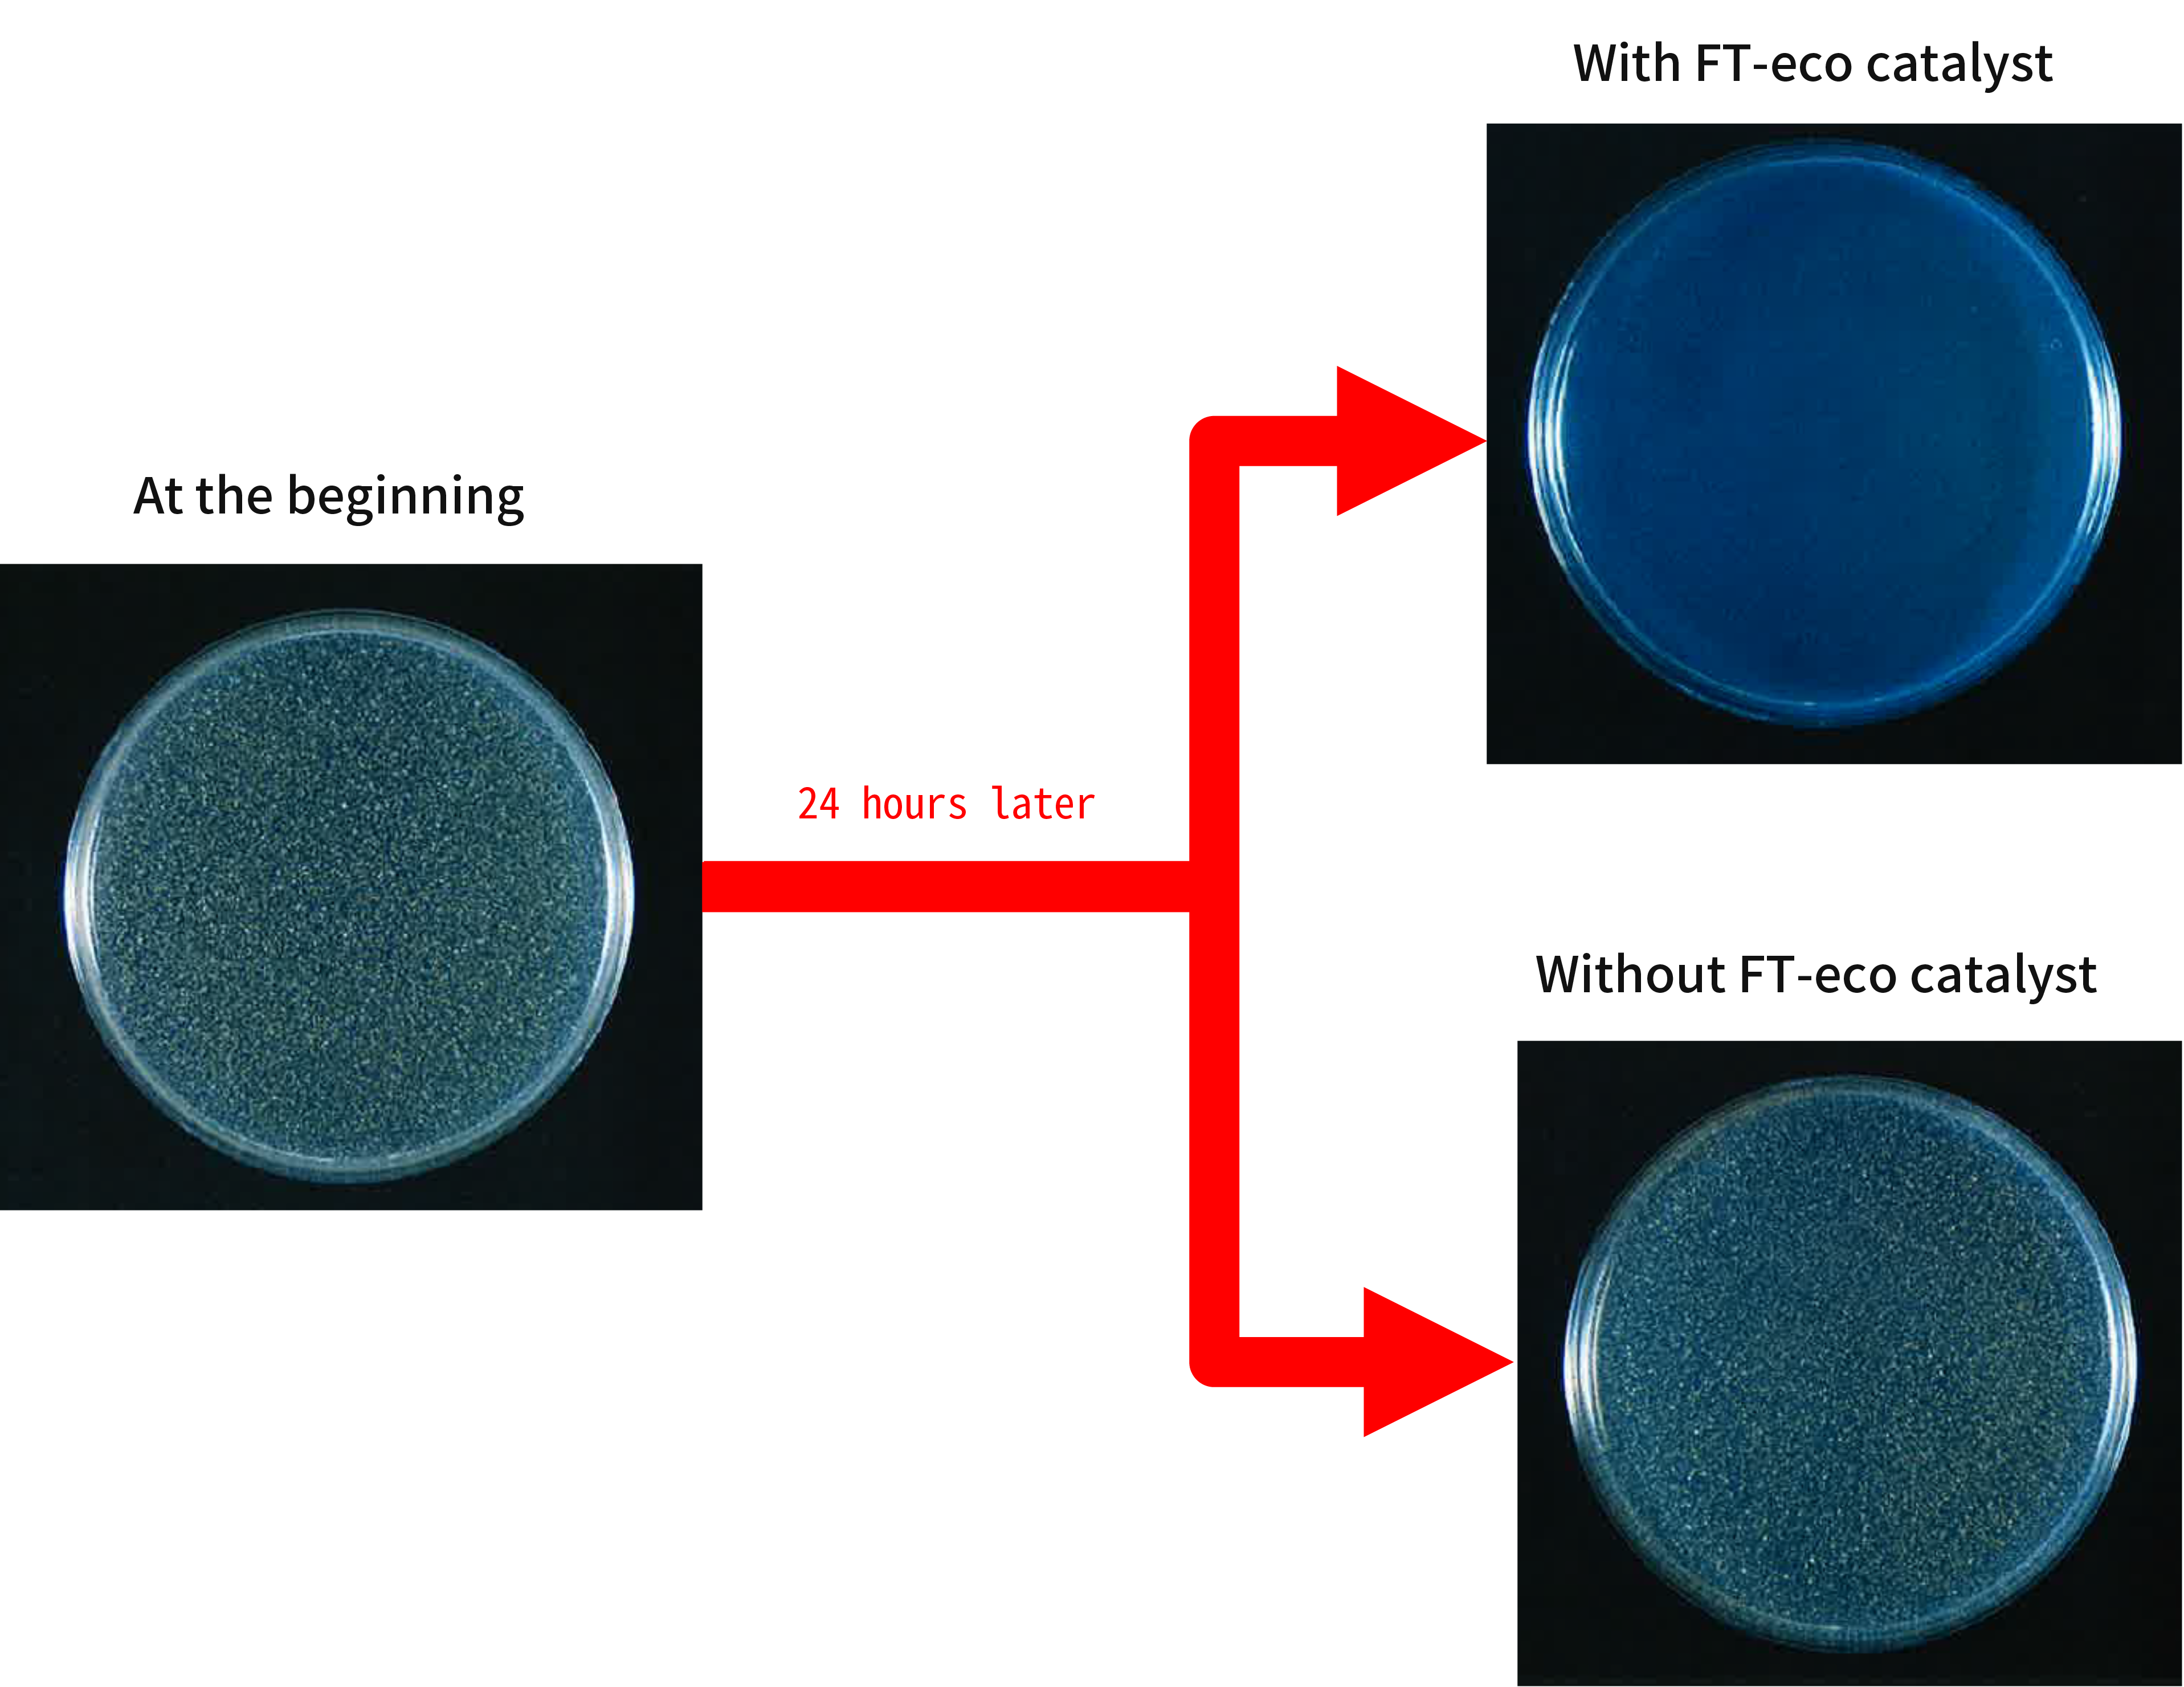 Test image of Staphylococcus aureus